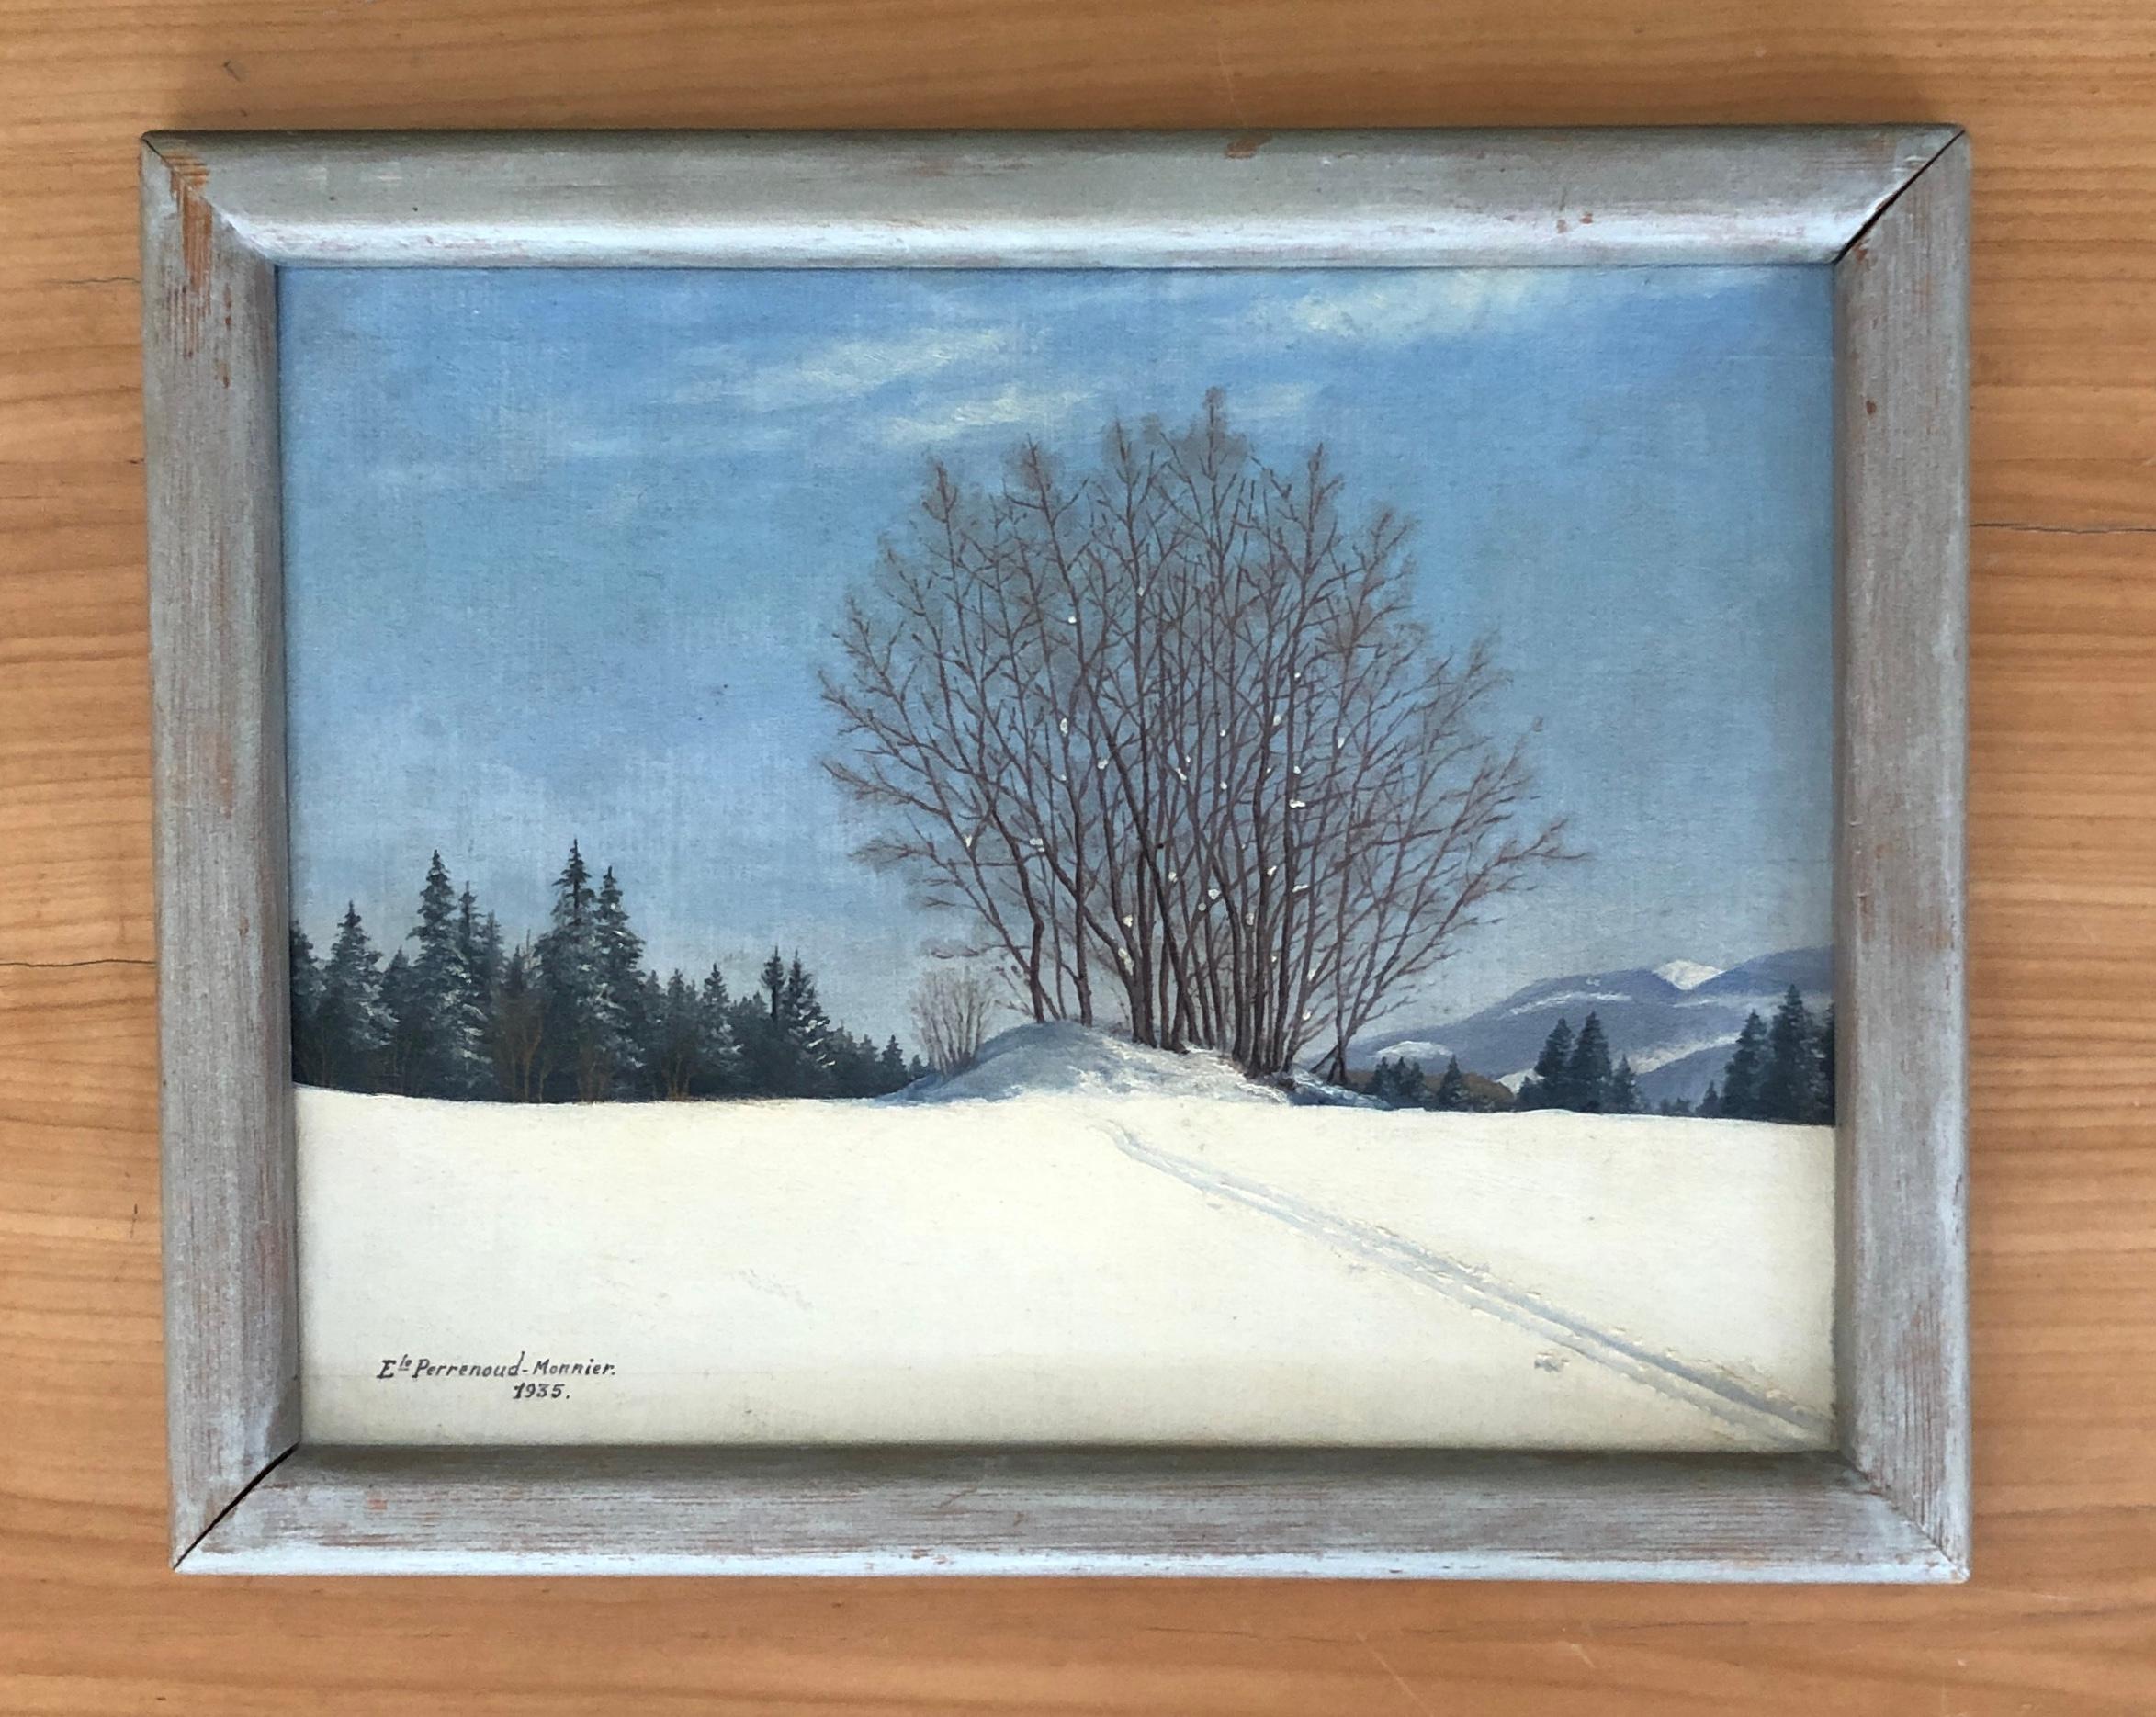 Snowy landscape - Painting by E. Perrenoud -Monnier